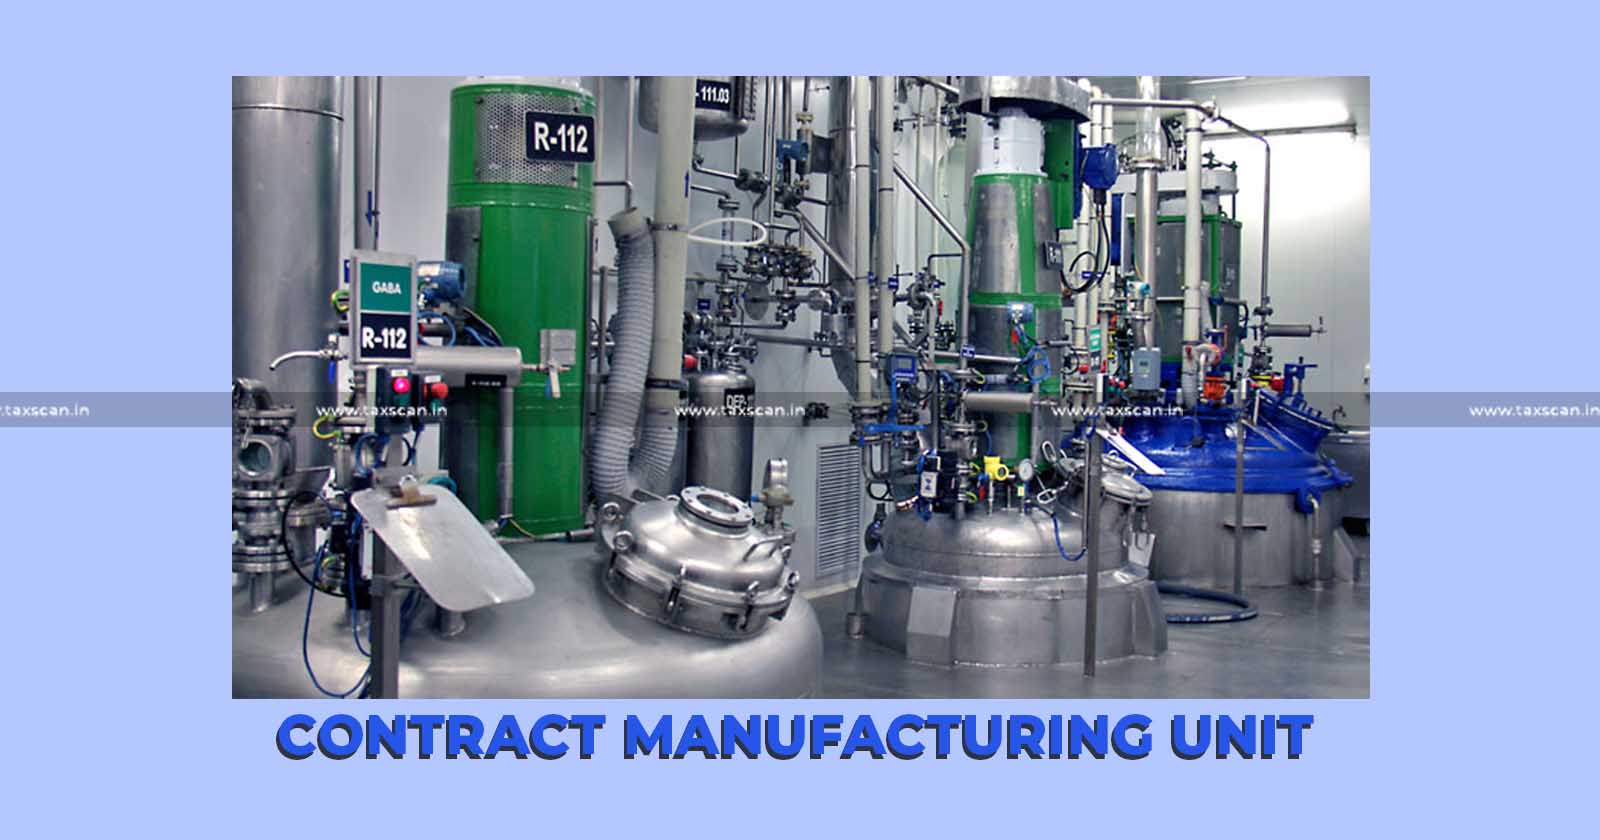 Input - Service - Credit - Contract - Manufacturing - Unit - CESTAT - TAXSCAN